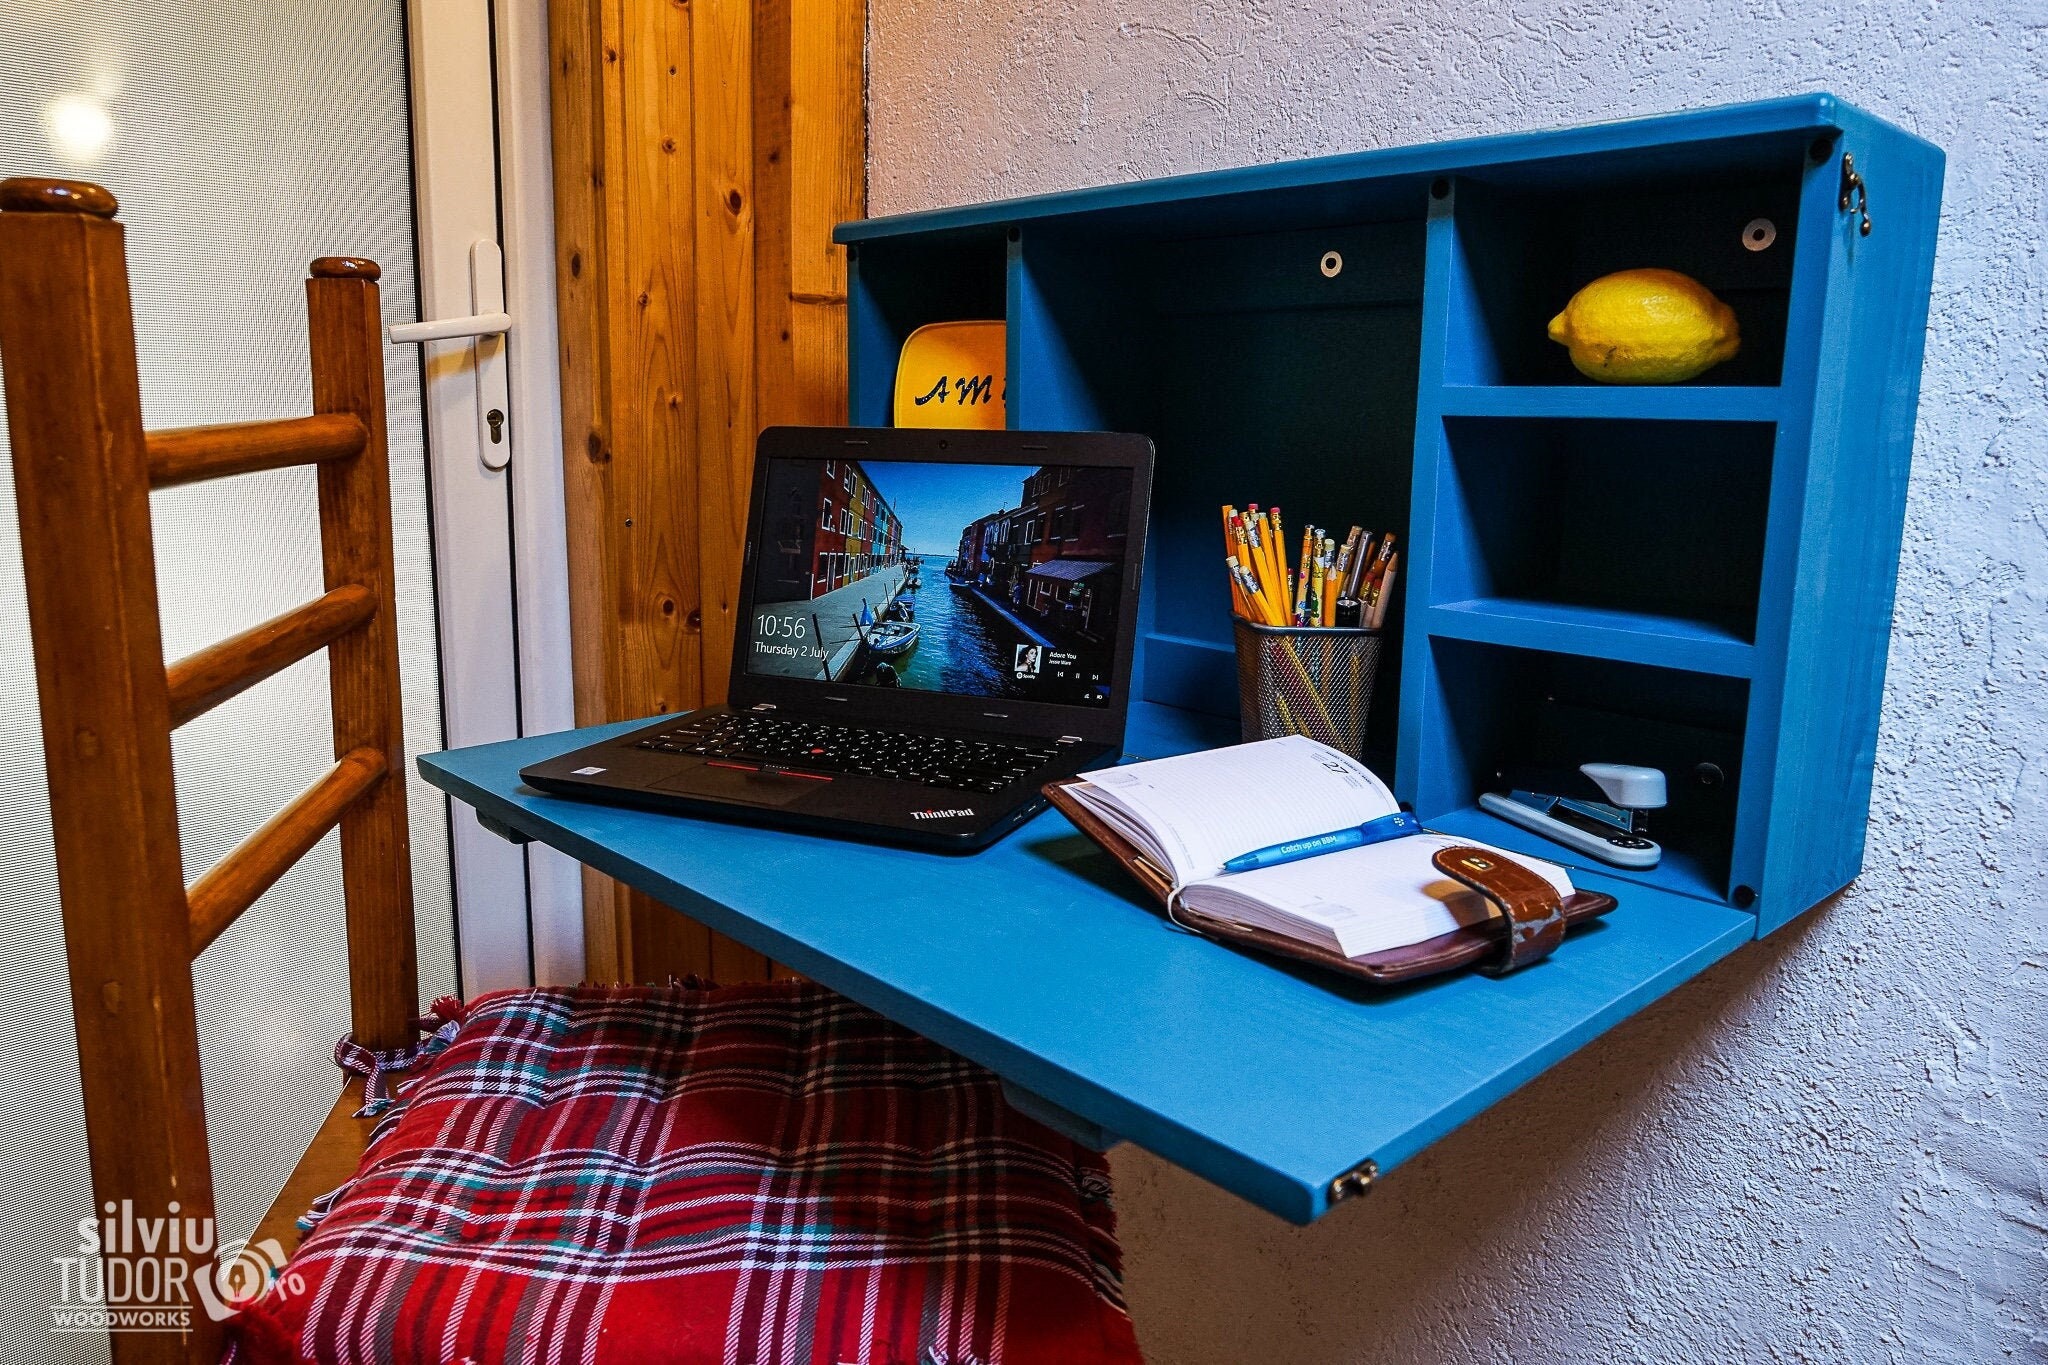 Floating Desk Wall Mount Multi Functional Desk for Kids, Folding Desk –  High Five Creations